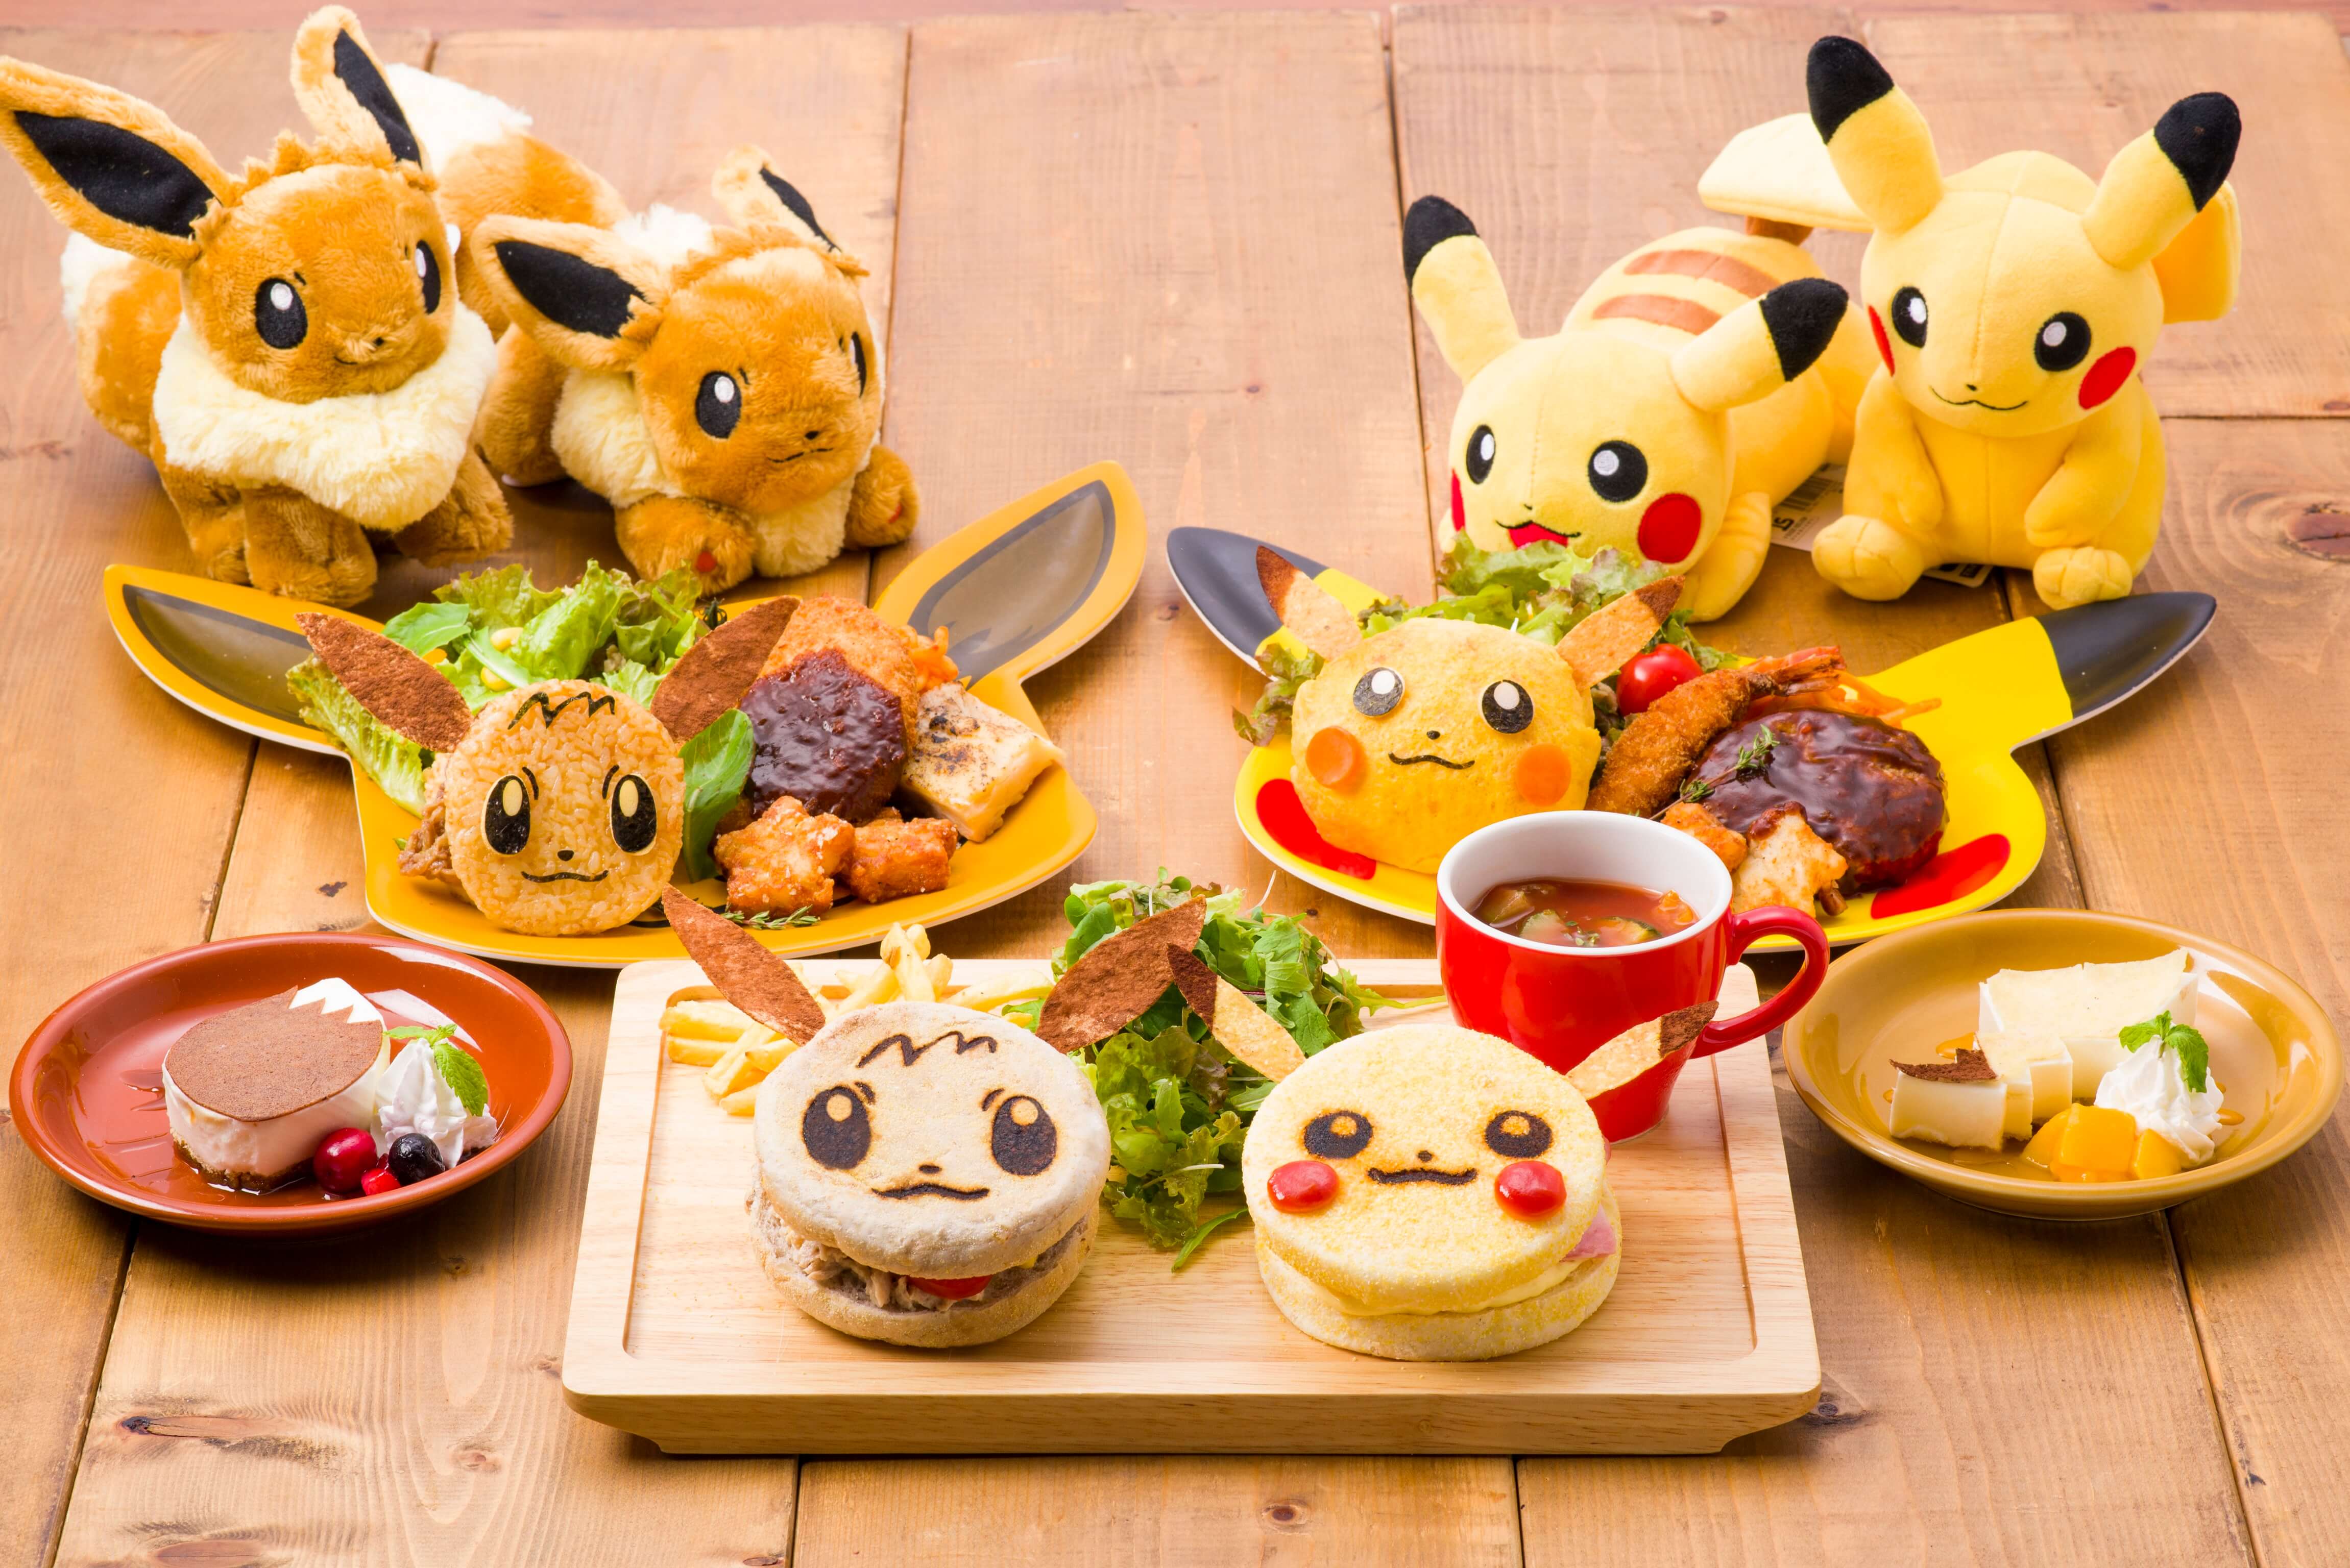 POKÉMON CAFE Osaka - The most KAWAII Pikachu-Themed Restaurant in Japan! 